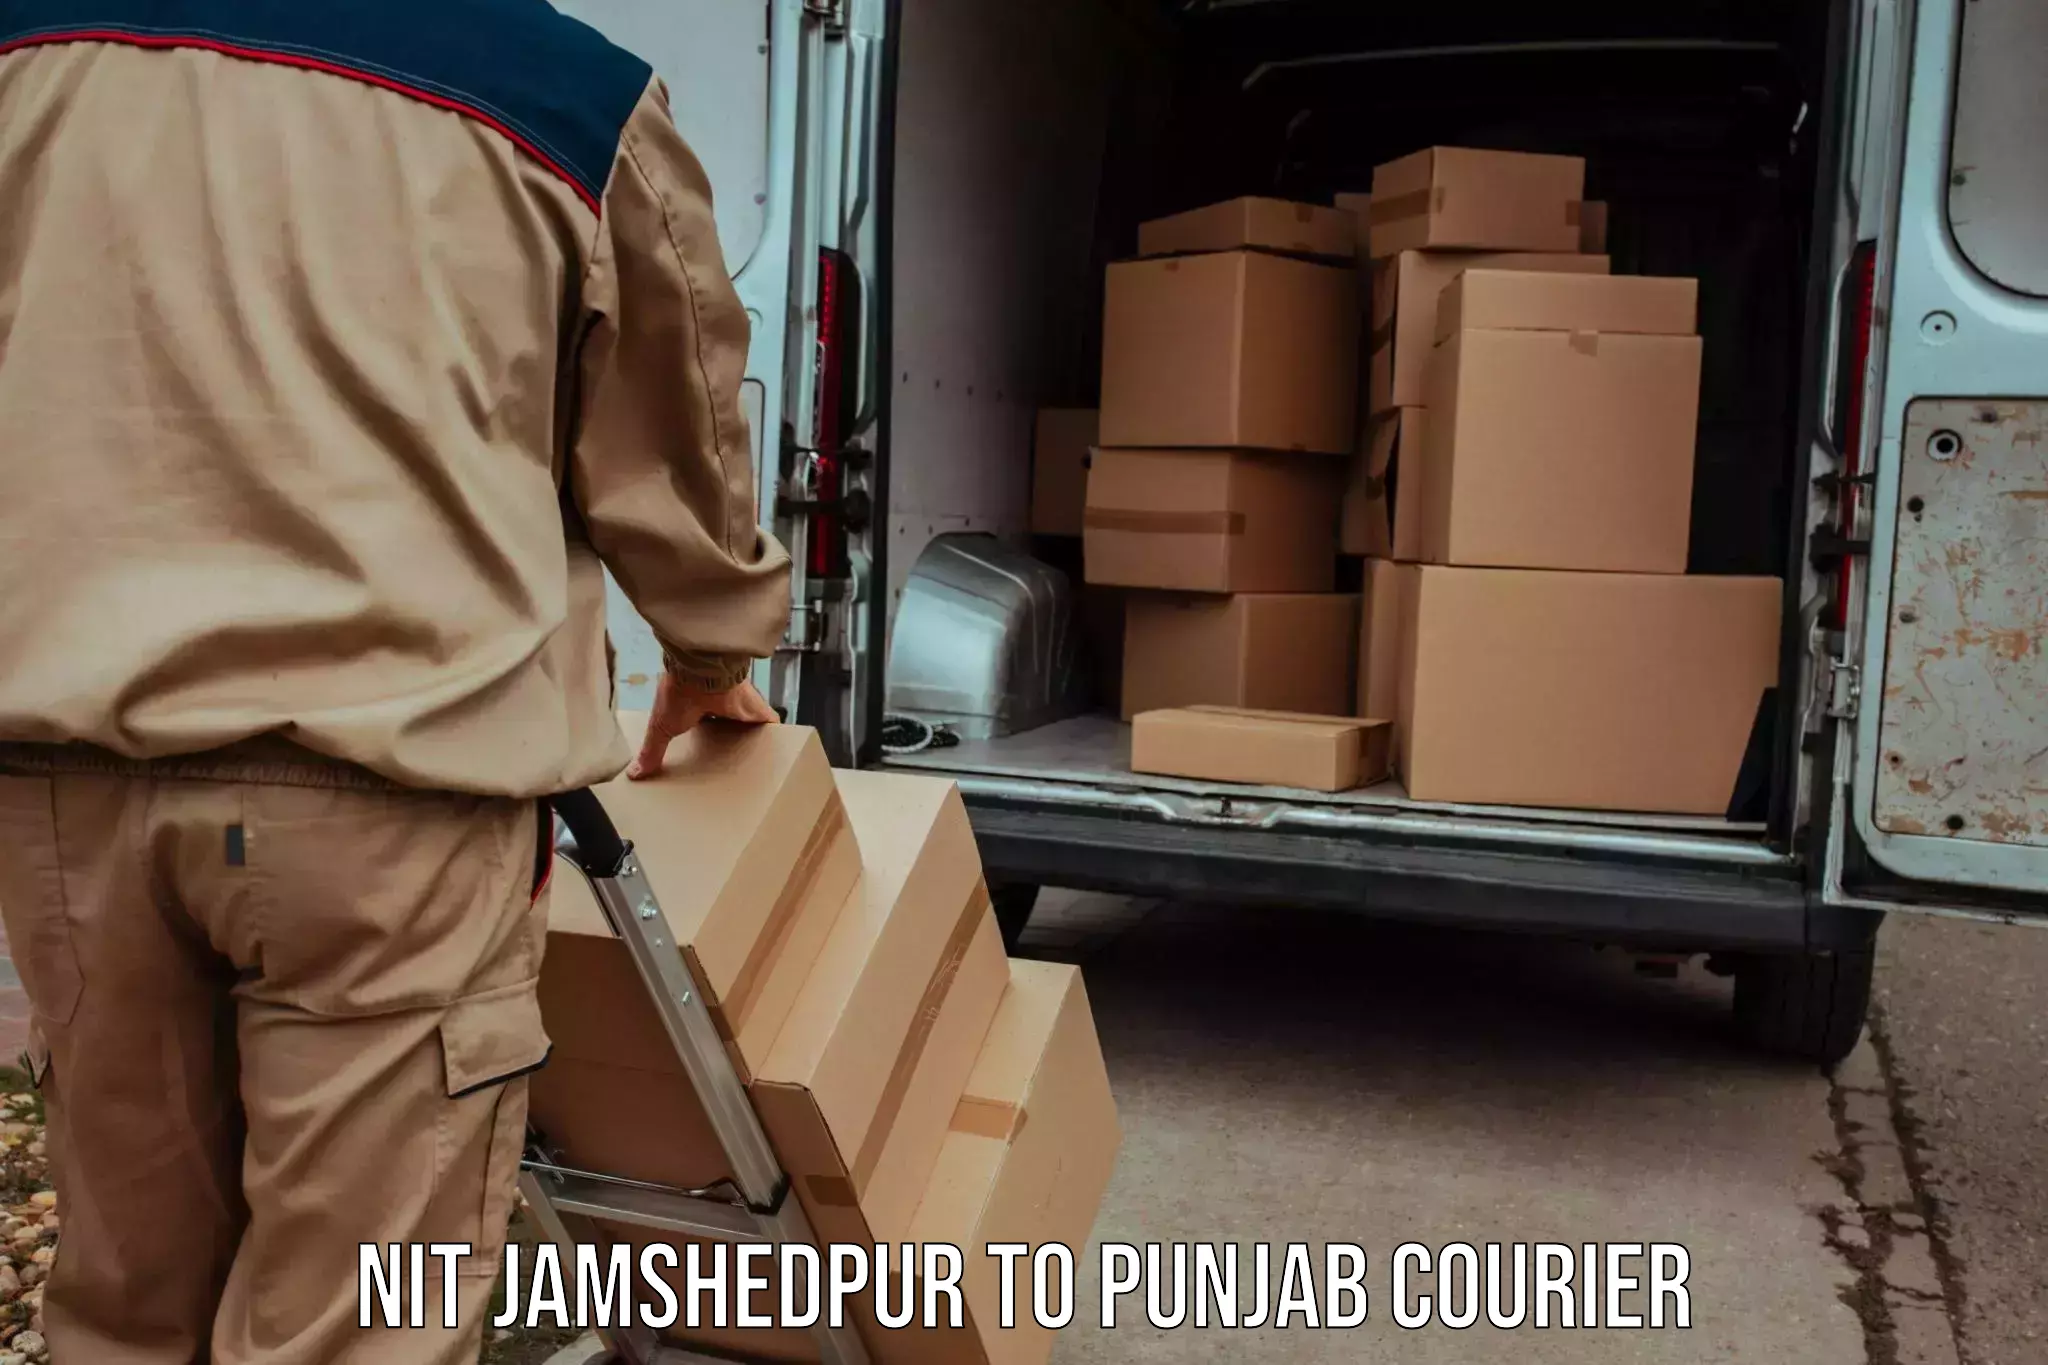 24-hour courier service NIT Jamshedpur to Batala